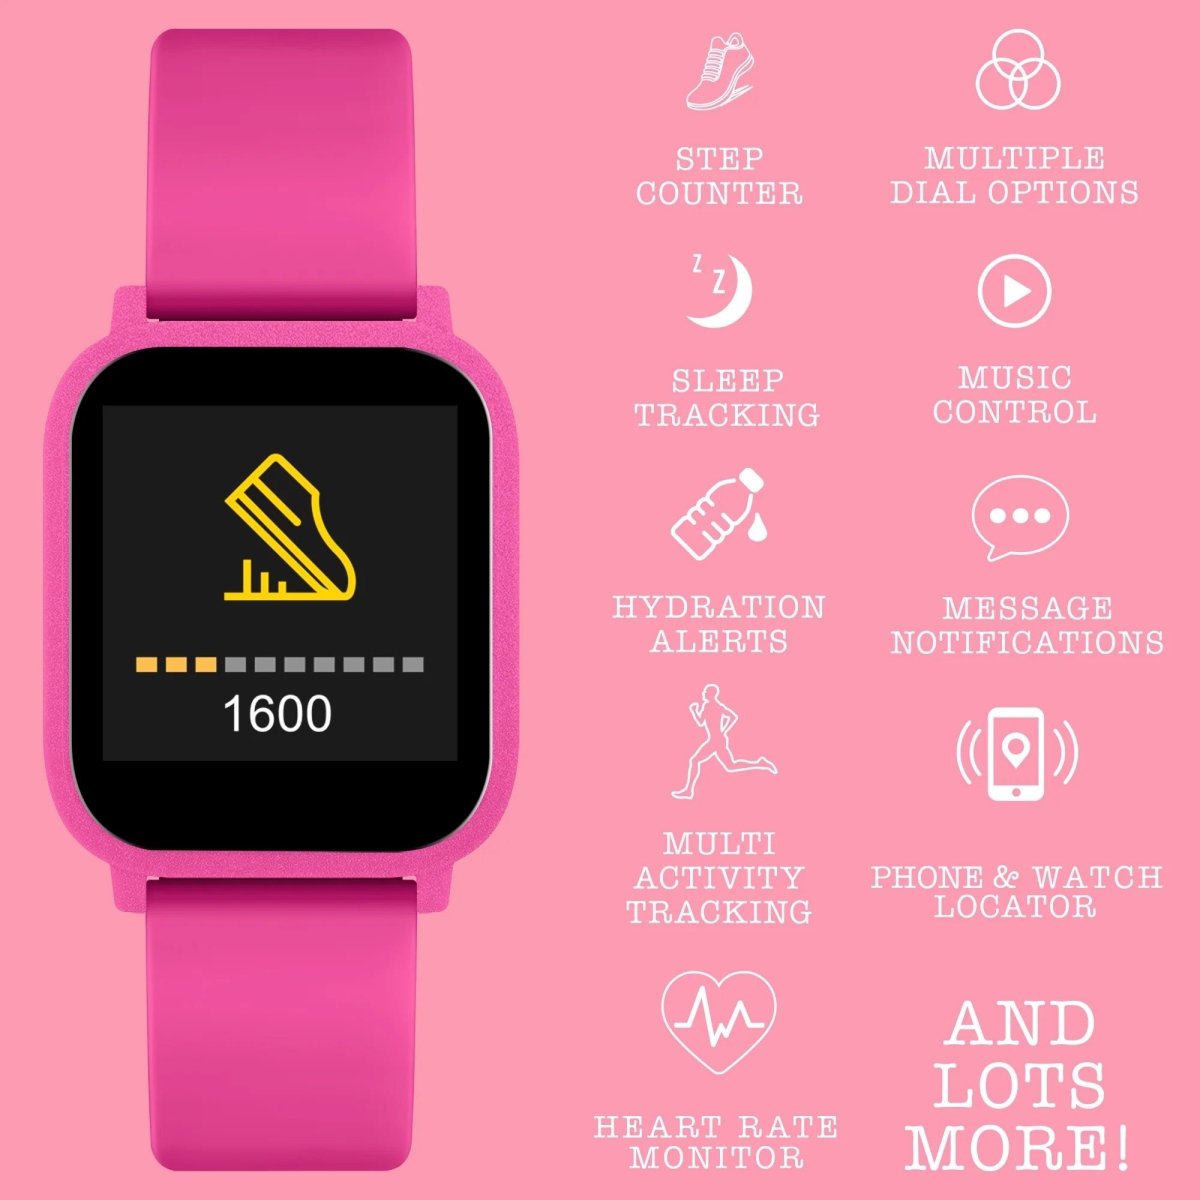 Tikkers TKS10-0003 Teen Smart Watch Pink Silicon Strap - Κοσμηματοπωλείο Goldy